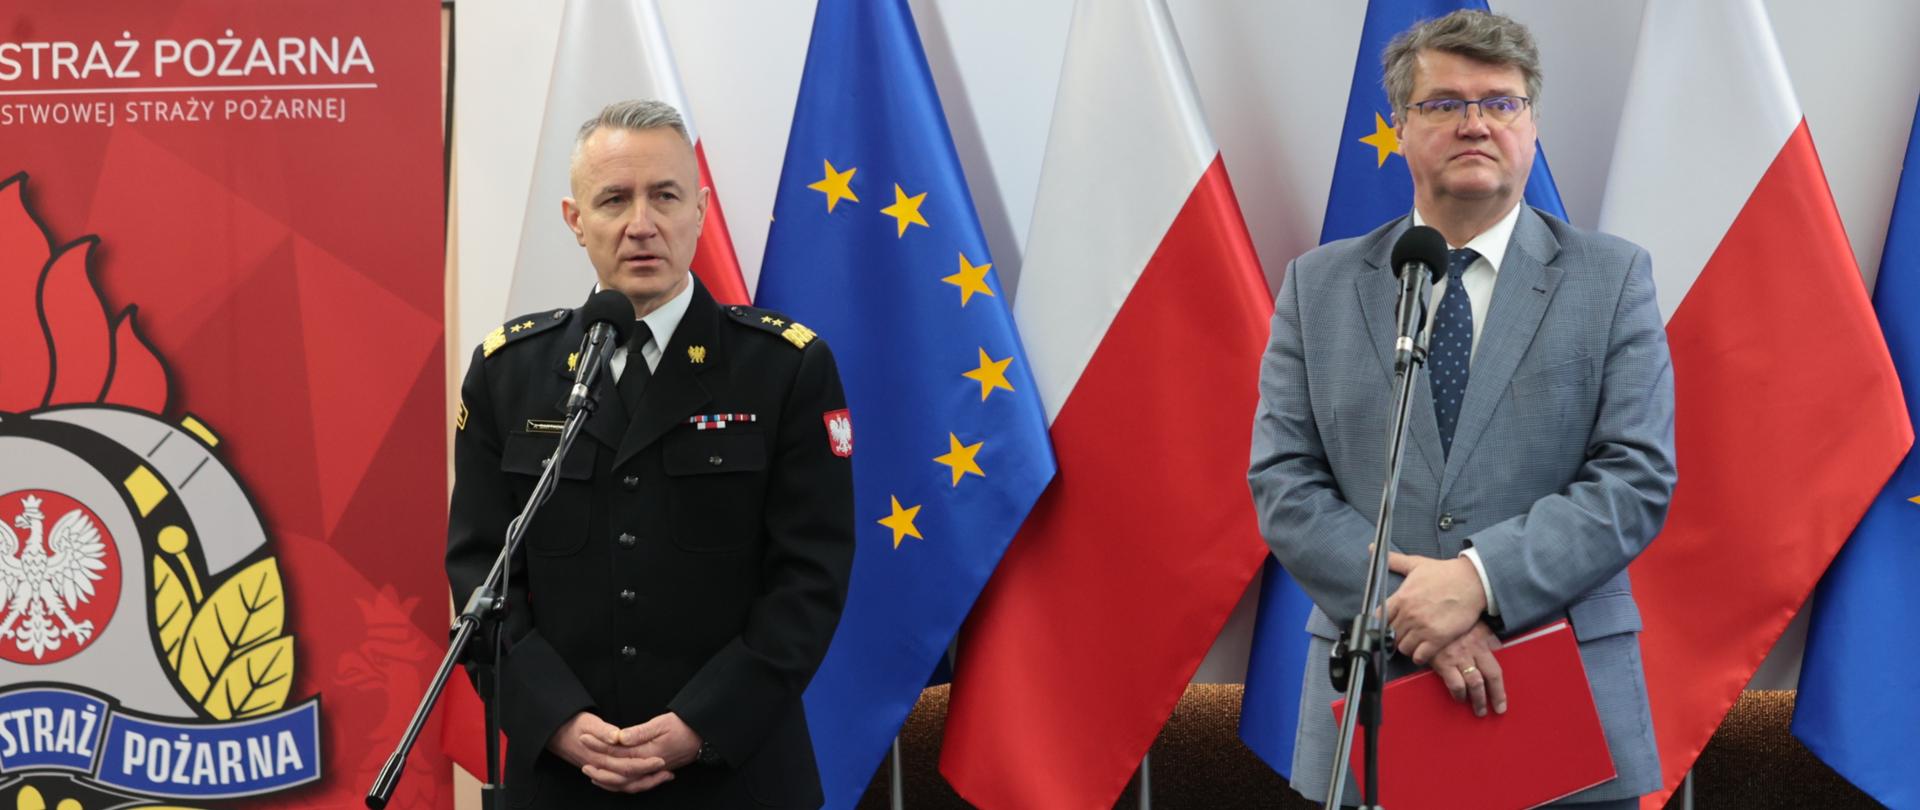 Minister i Komendant Główny PSP na tle flag Polski i UE.